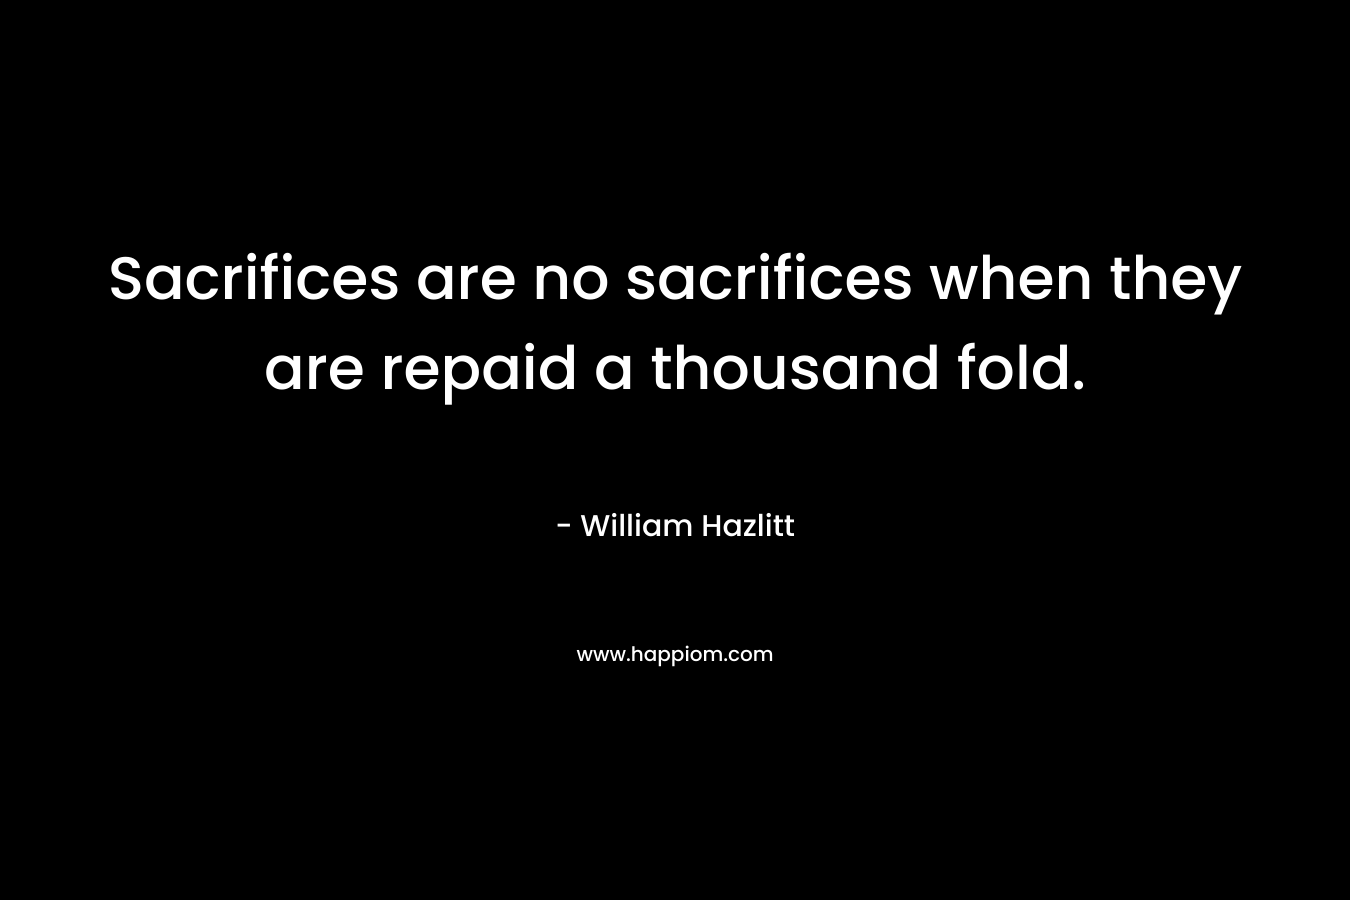 Sacrifices are no sacrifices when they are repaid a thousand fold. – William Hazlitt